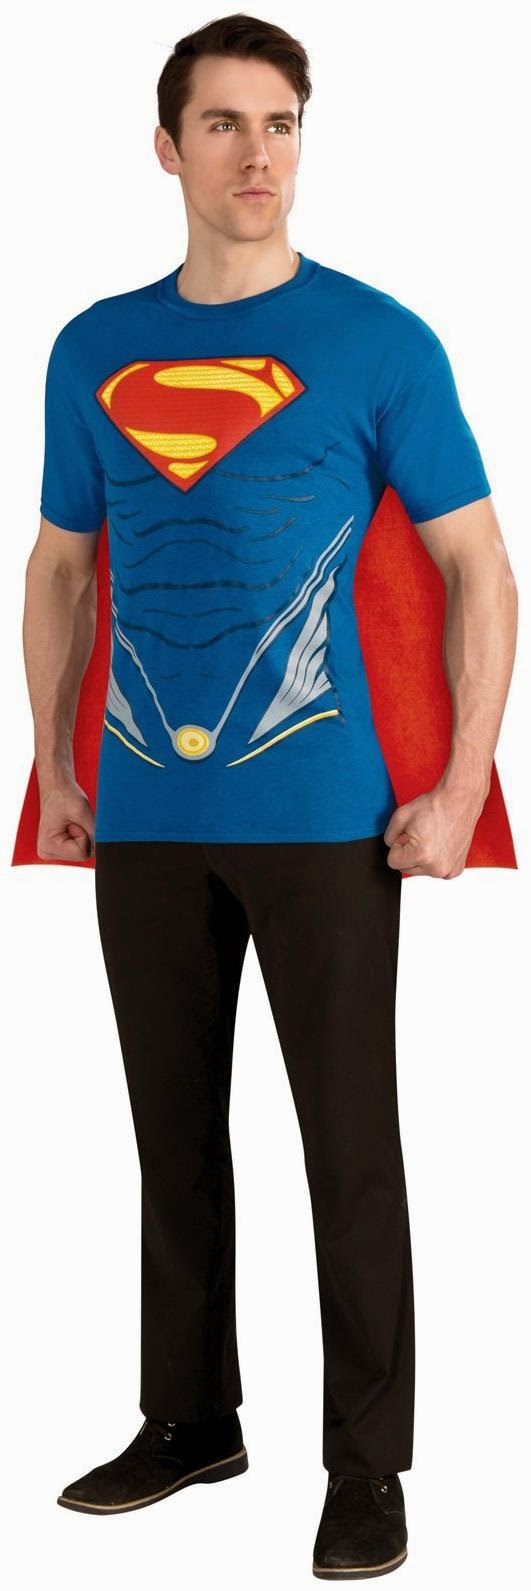 superman-t-shirt